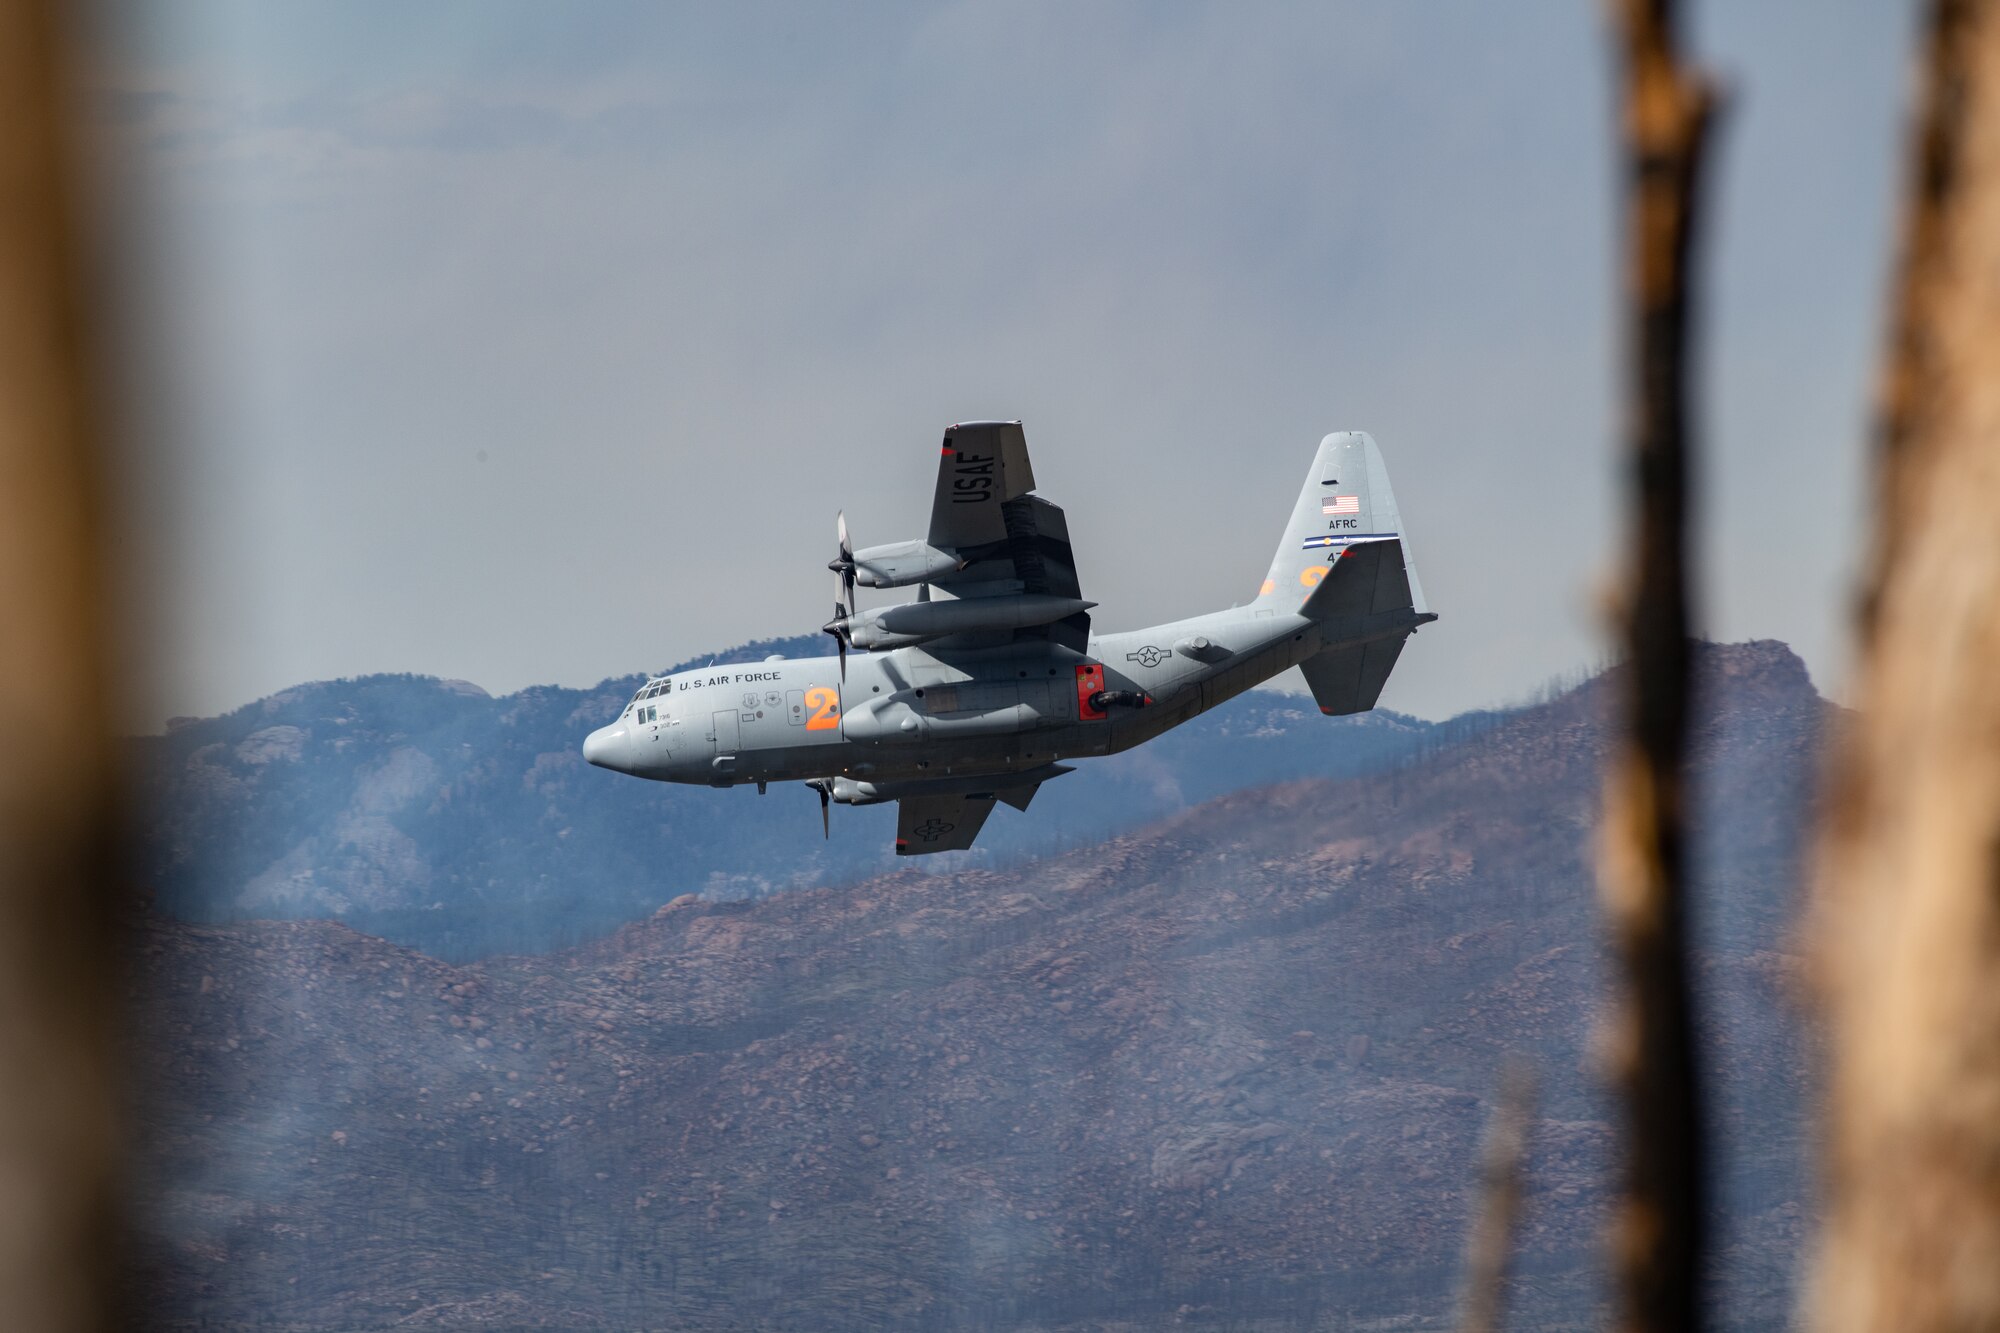 C-130 dropping potable water on mountain ridge